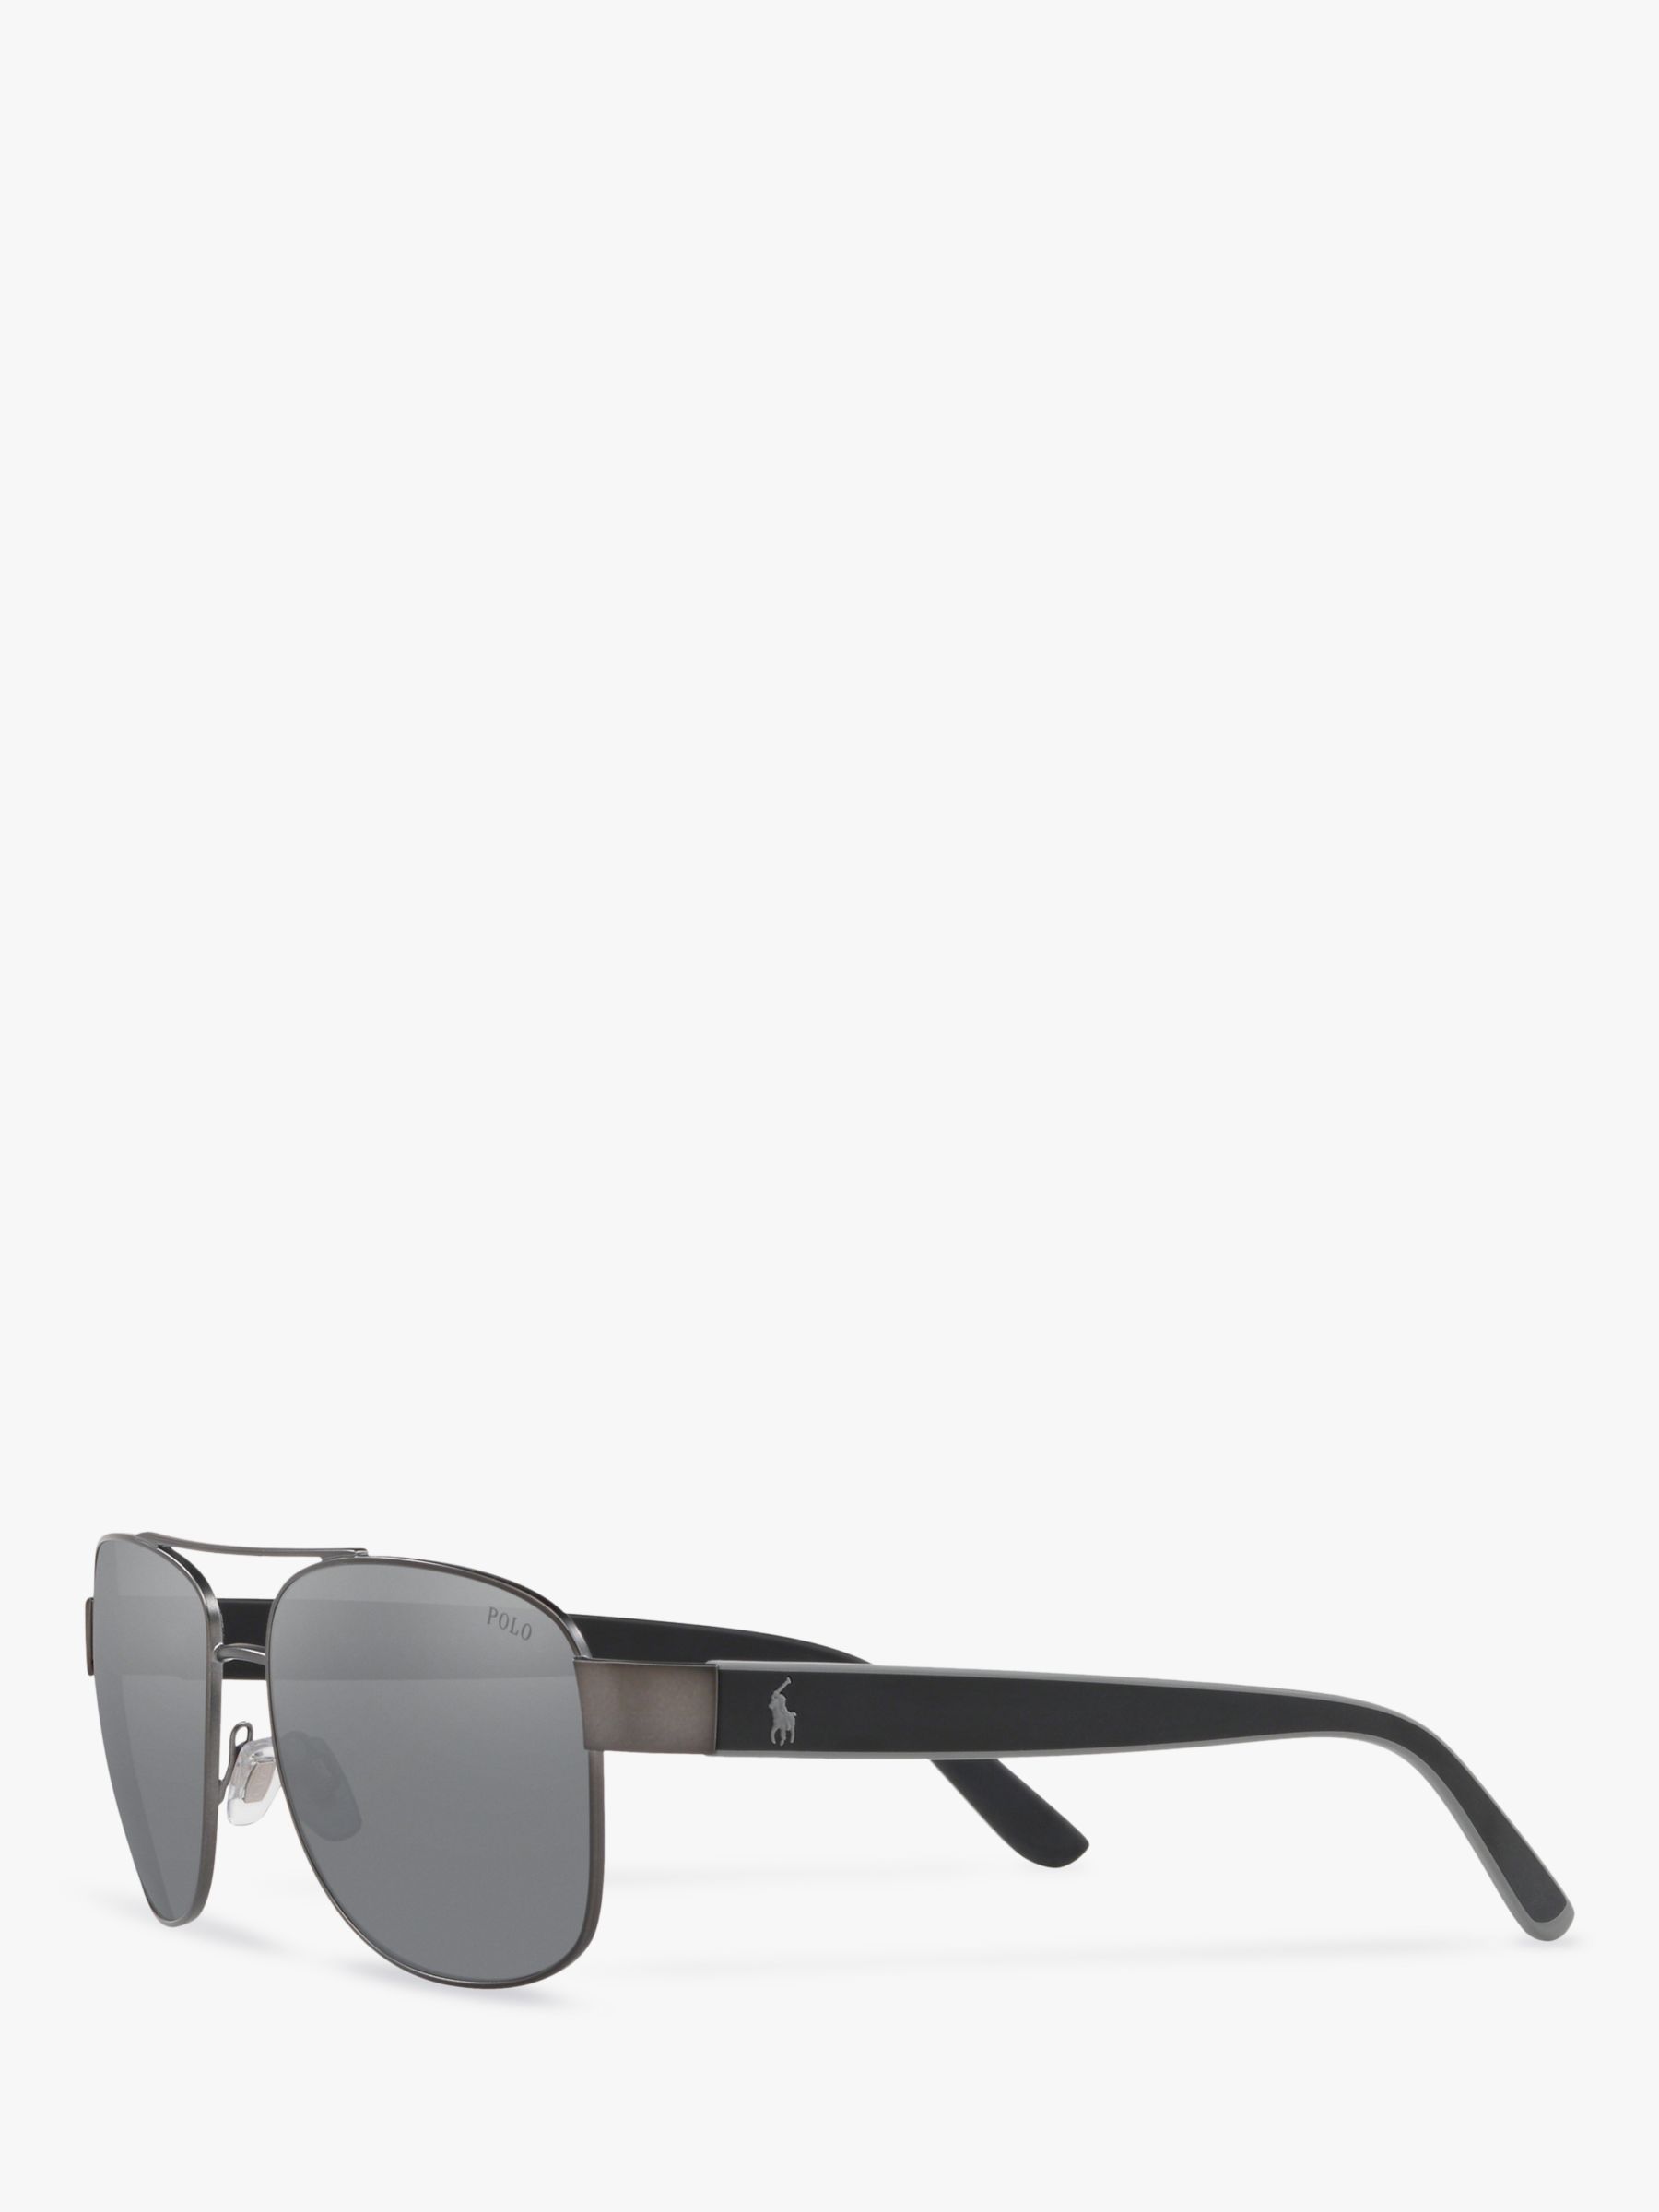 Ralph Lauren PH3122 Men's Pilot Sunglasses, Matte Dark Gunmetal